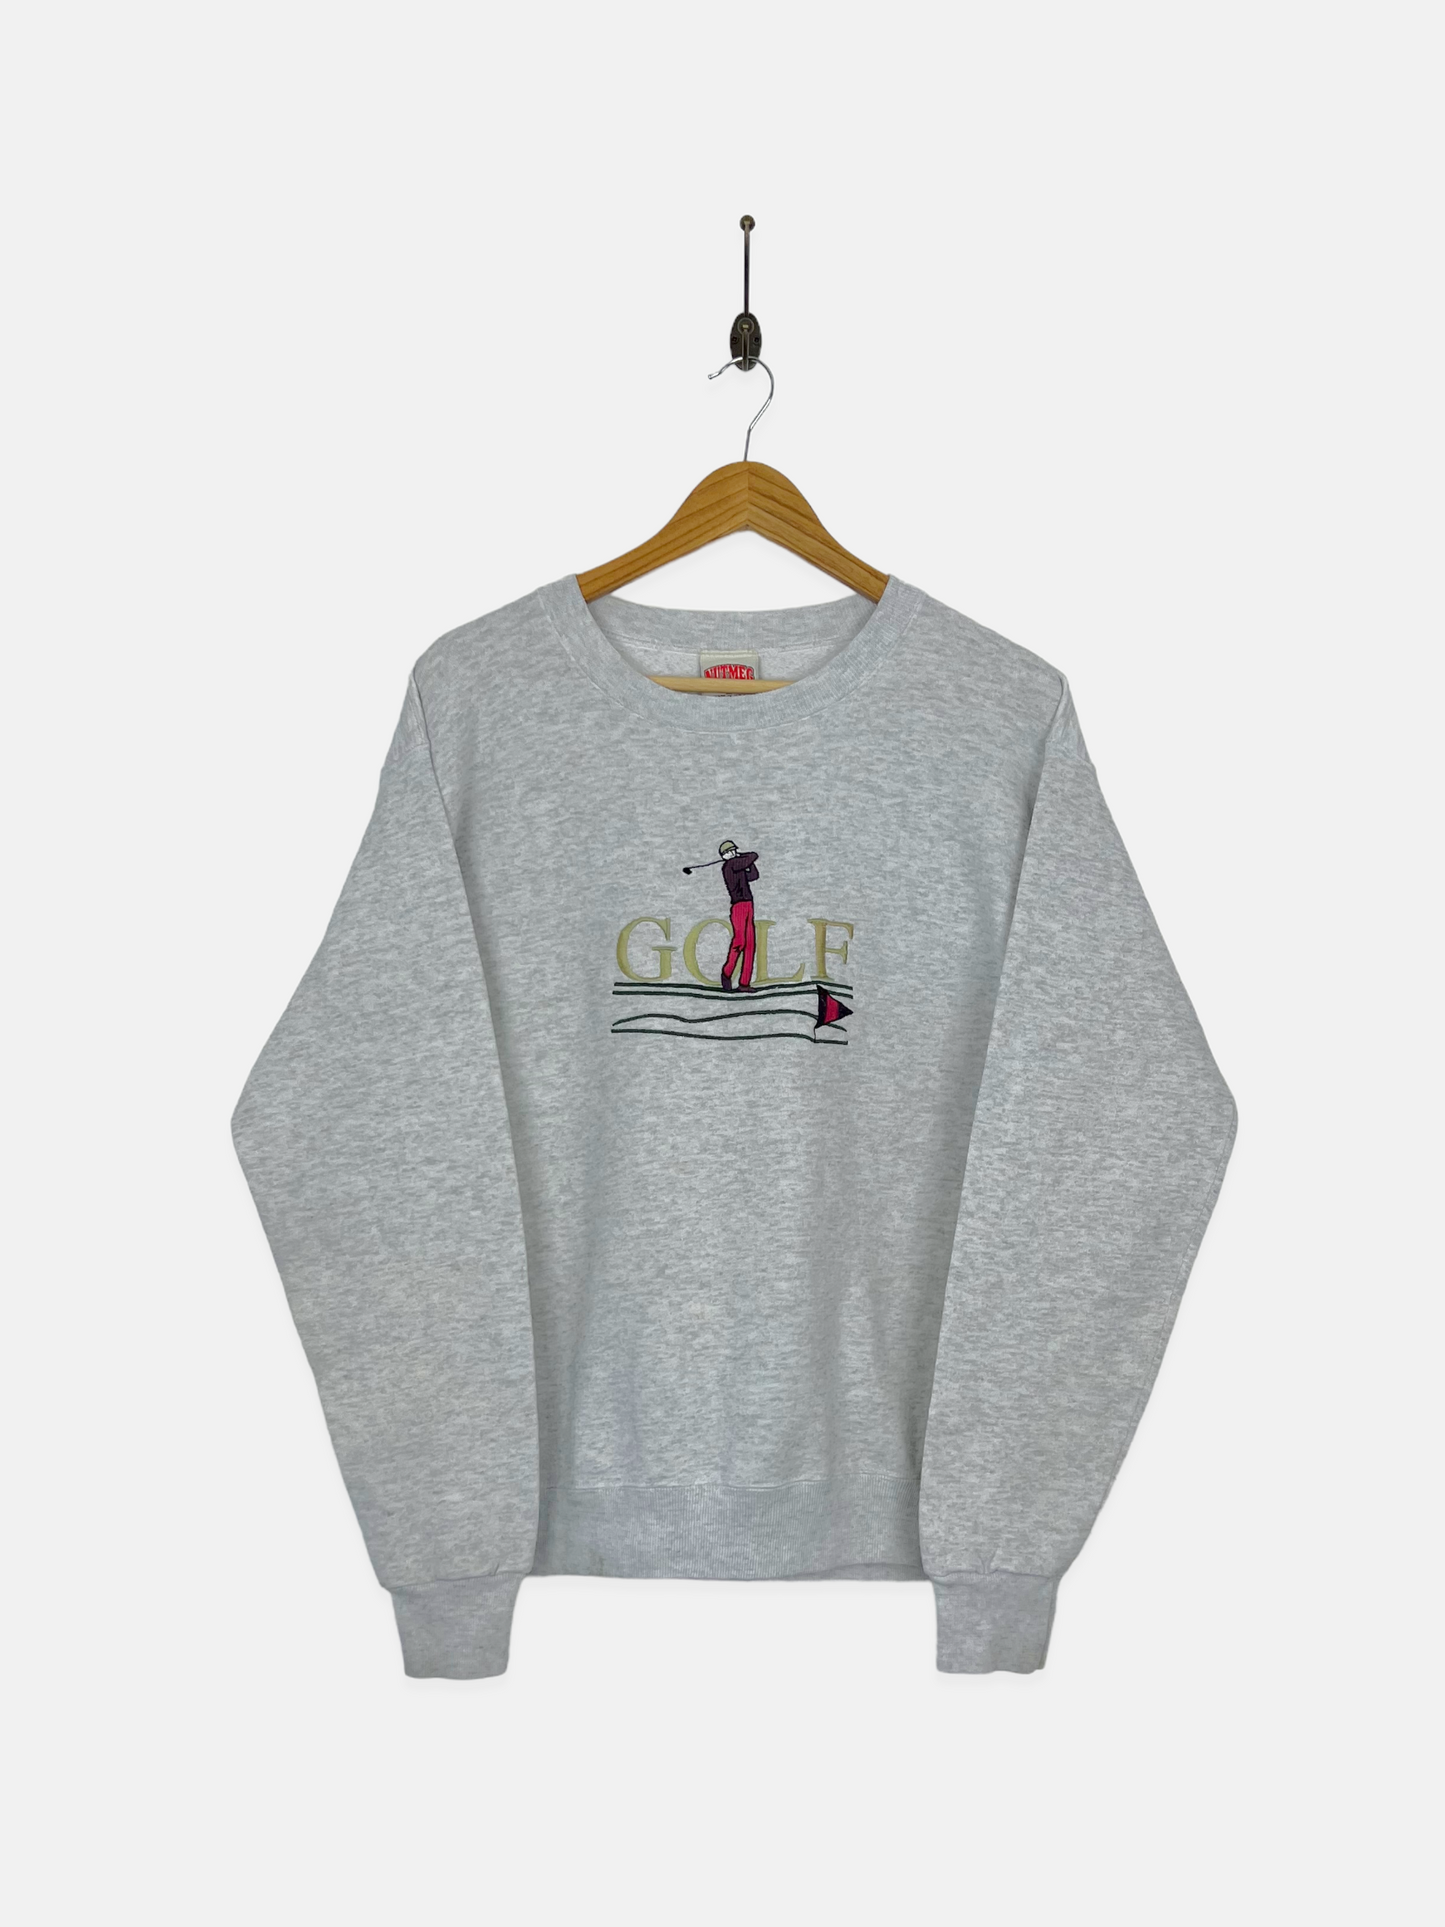 90's Golf USA Made Embroidered Vintage Sweatshirt Size 12